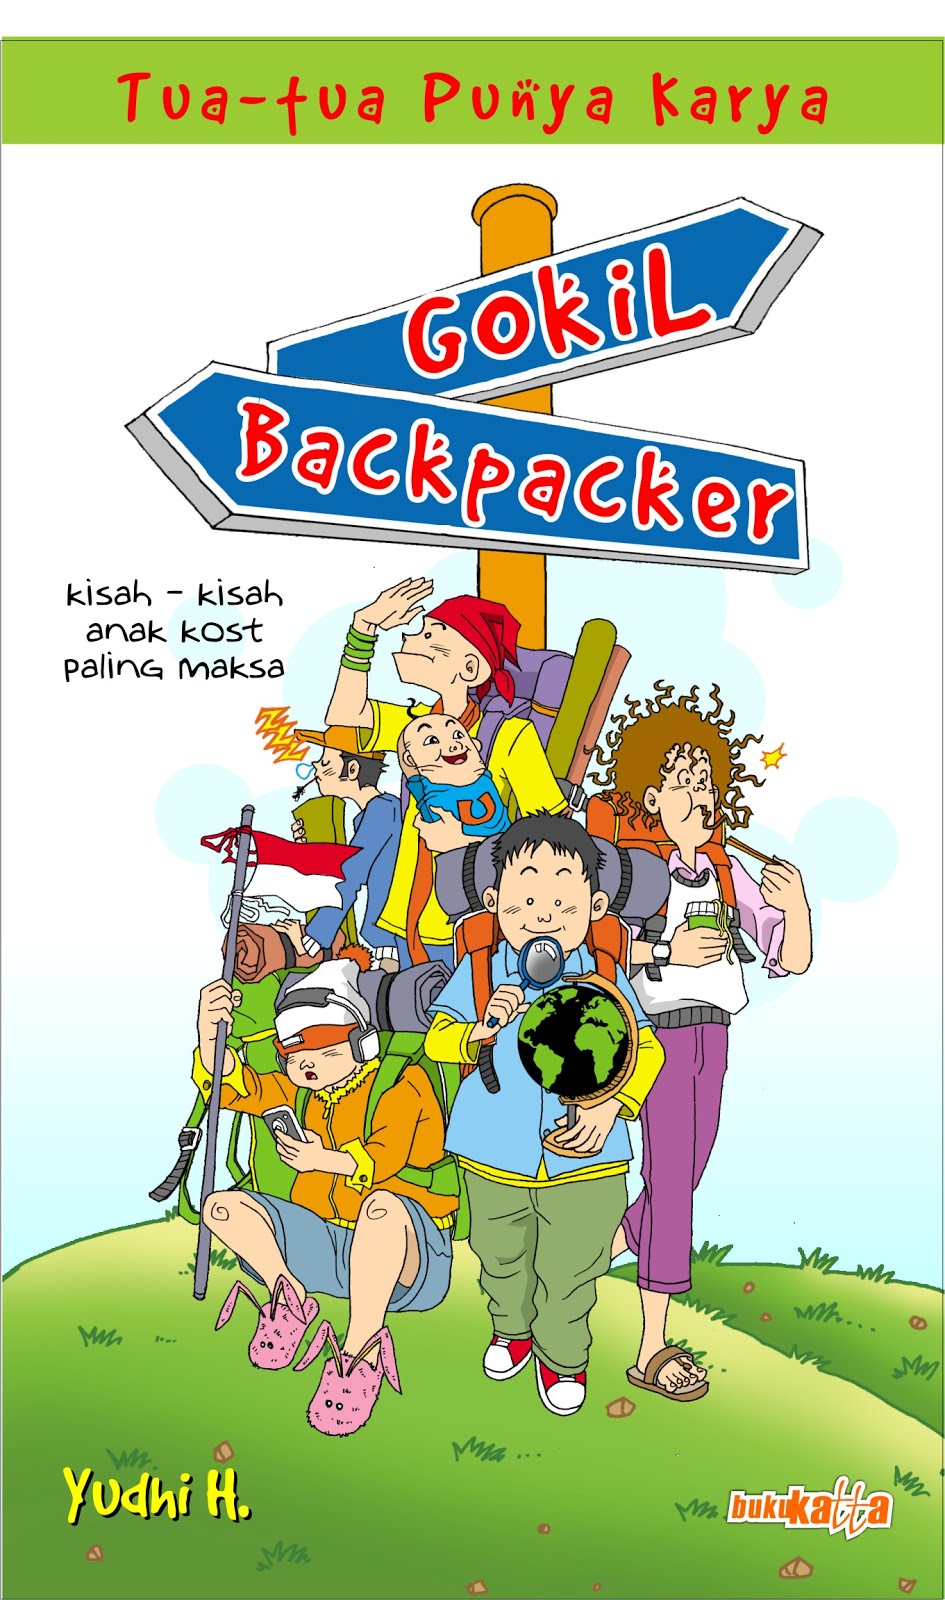 Gokil Backpacker, kisah-kisah anak kost paling maksa